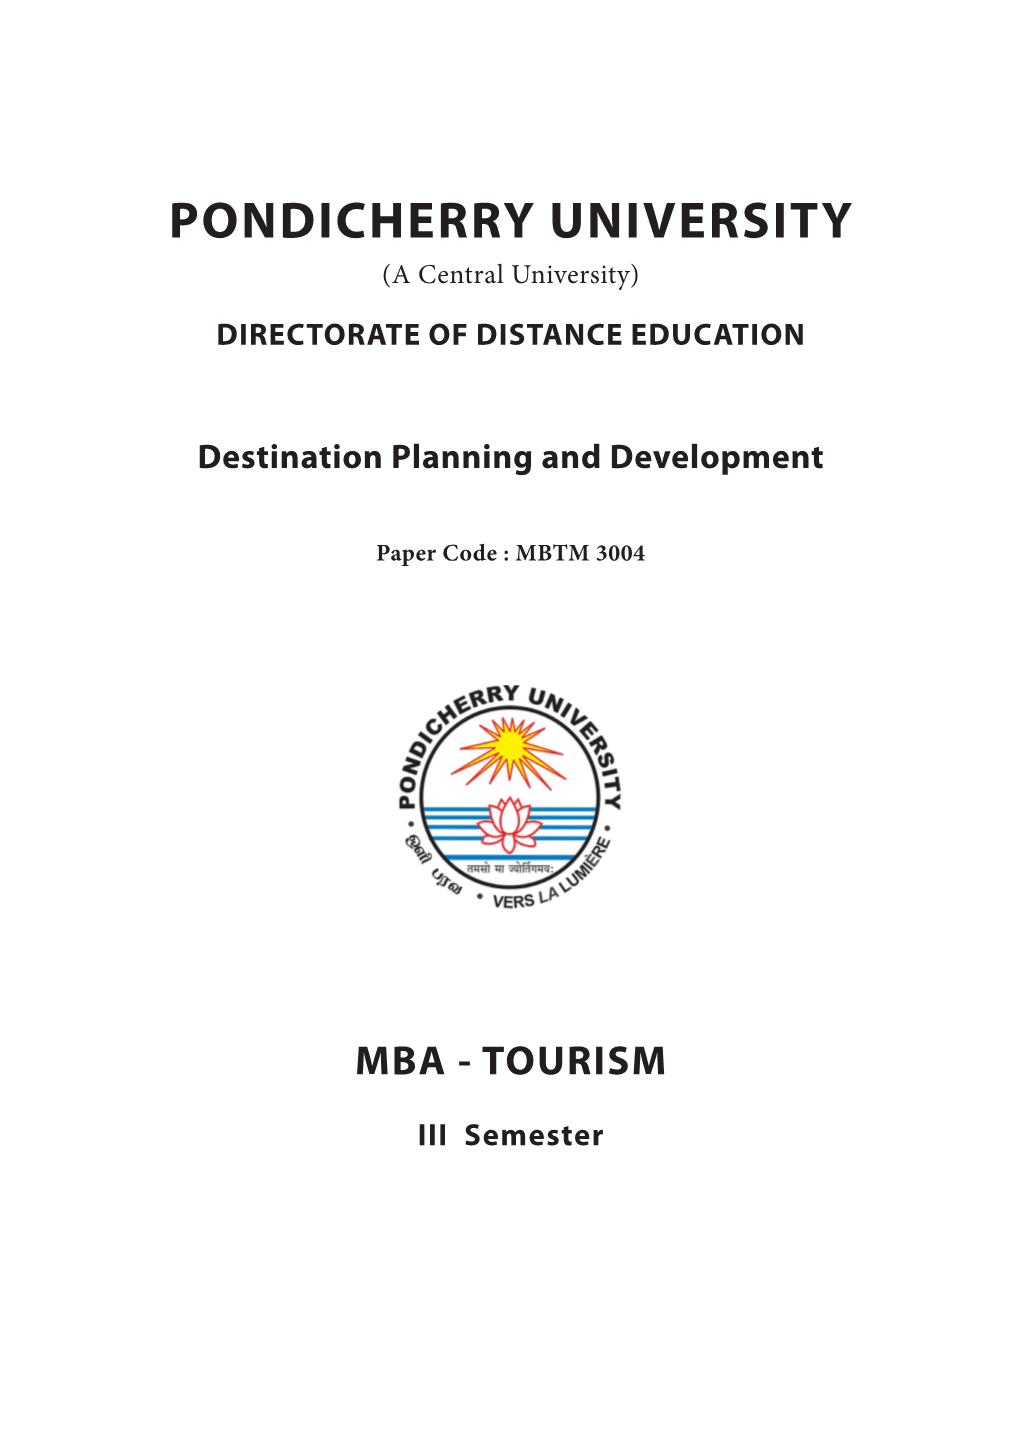 PONDICHERRY UNIVERSITY (A Central University) DIRECTORATE of DISTANCE EDUCATION